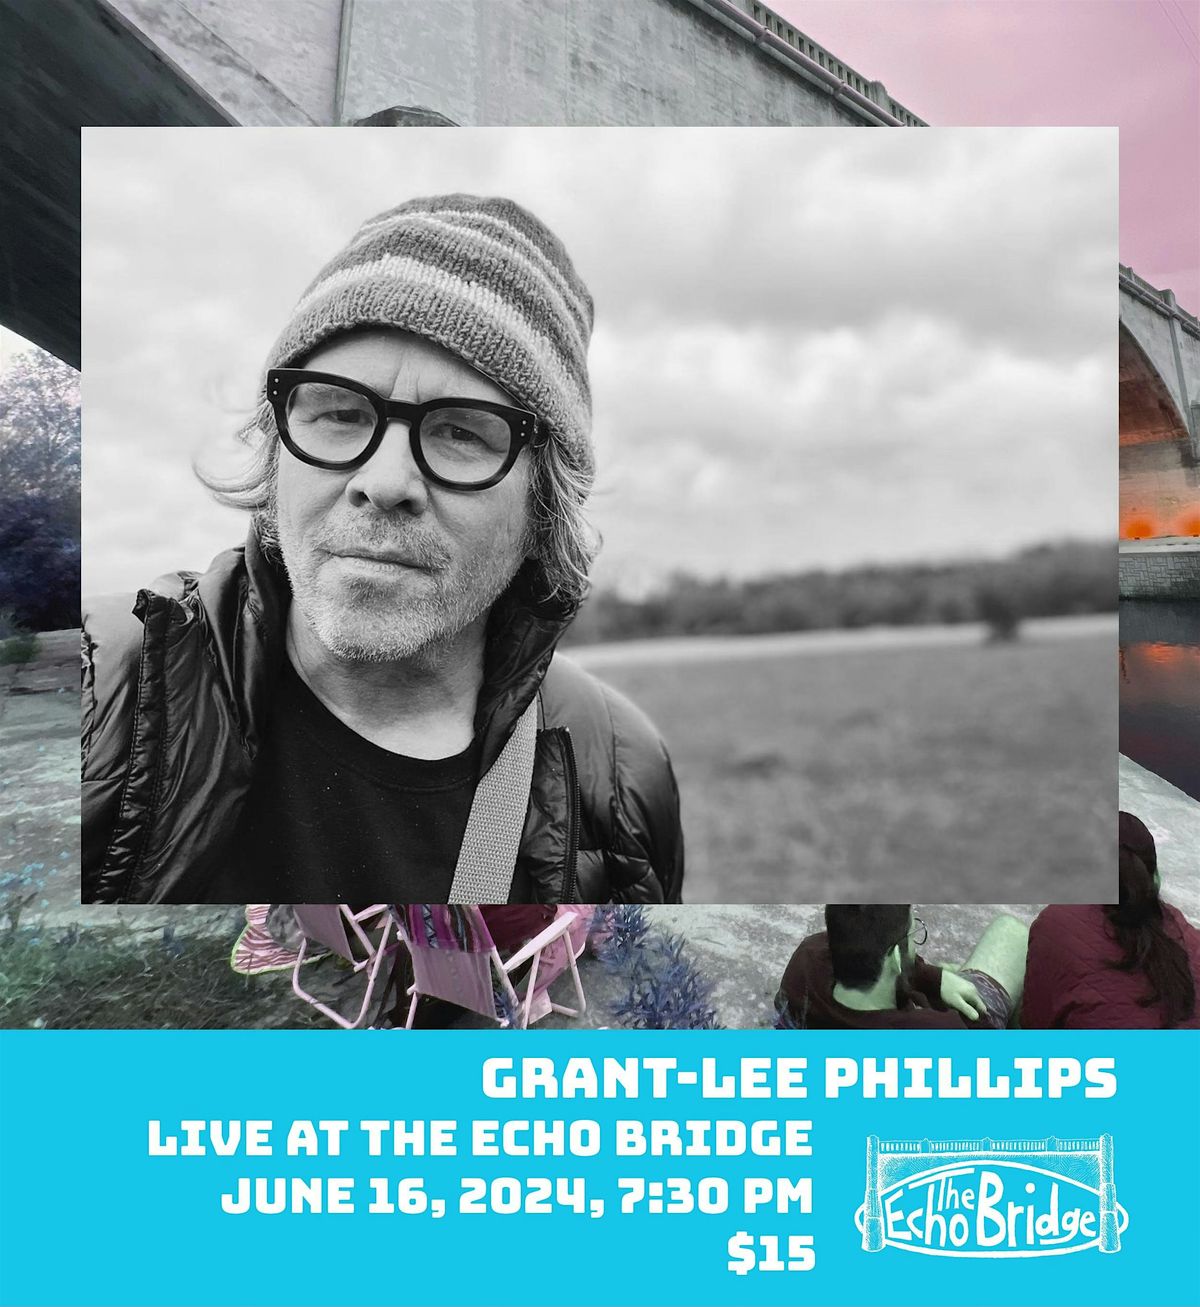 Grant-Lee Phillips - Live at The Echo Bridge!